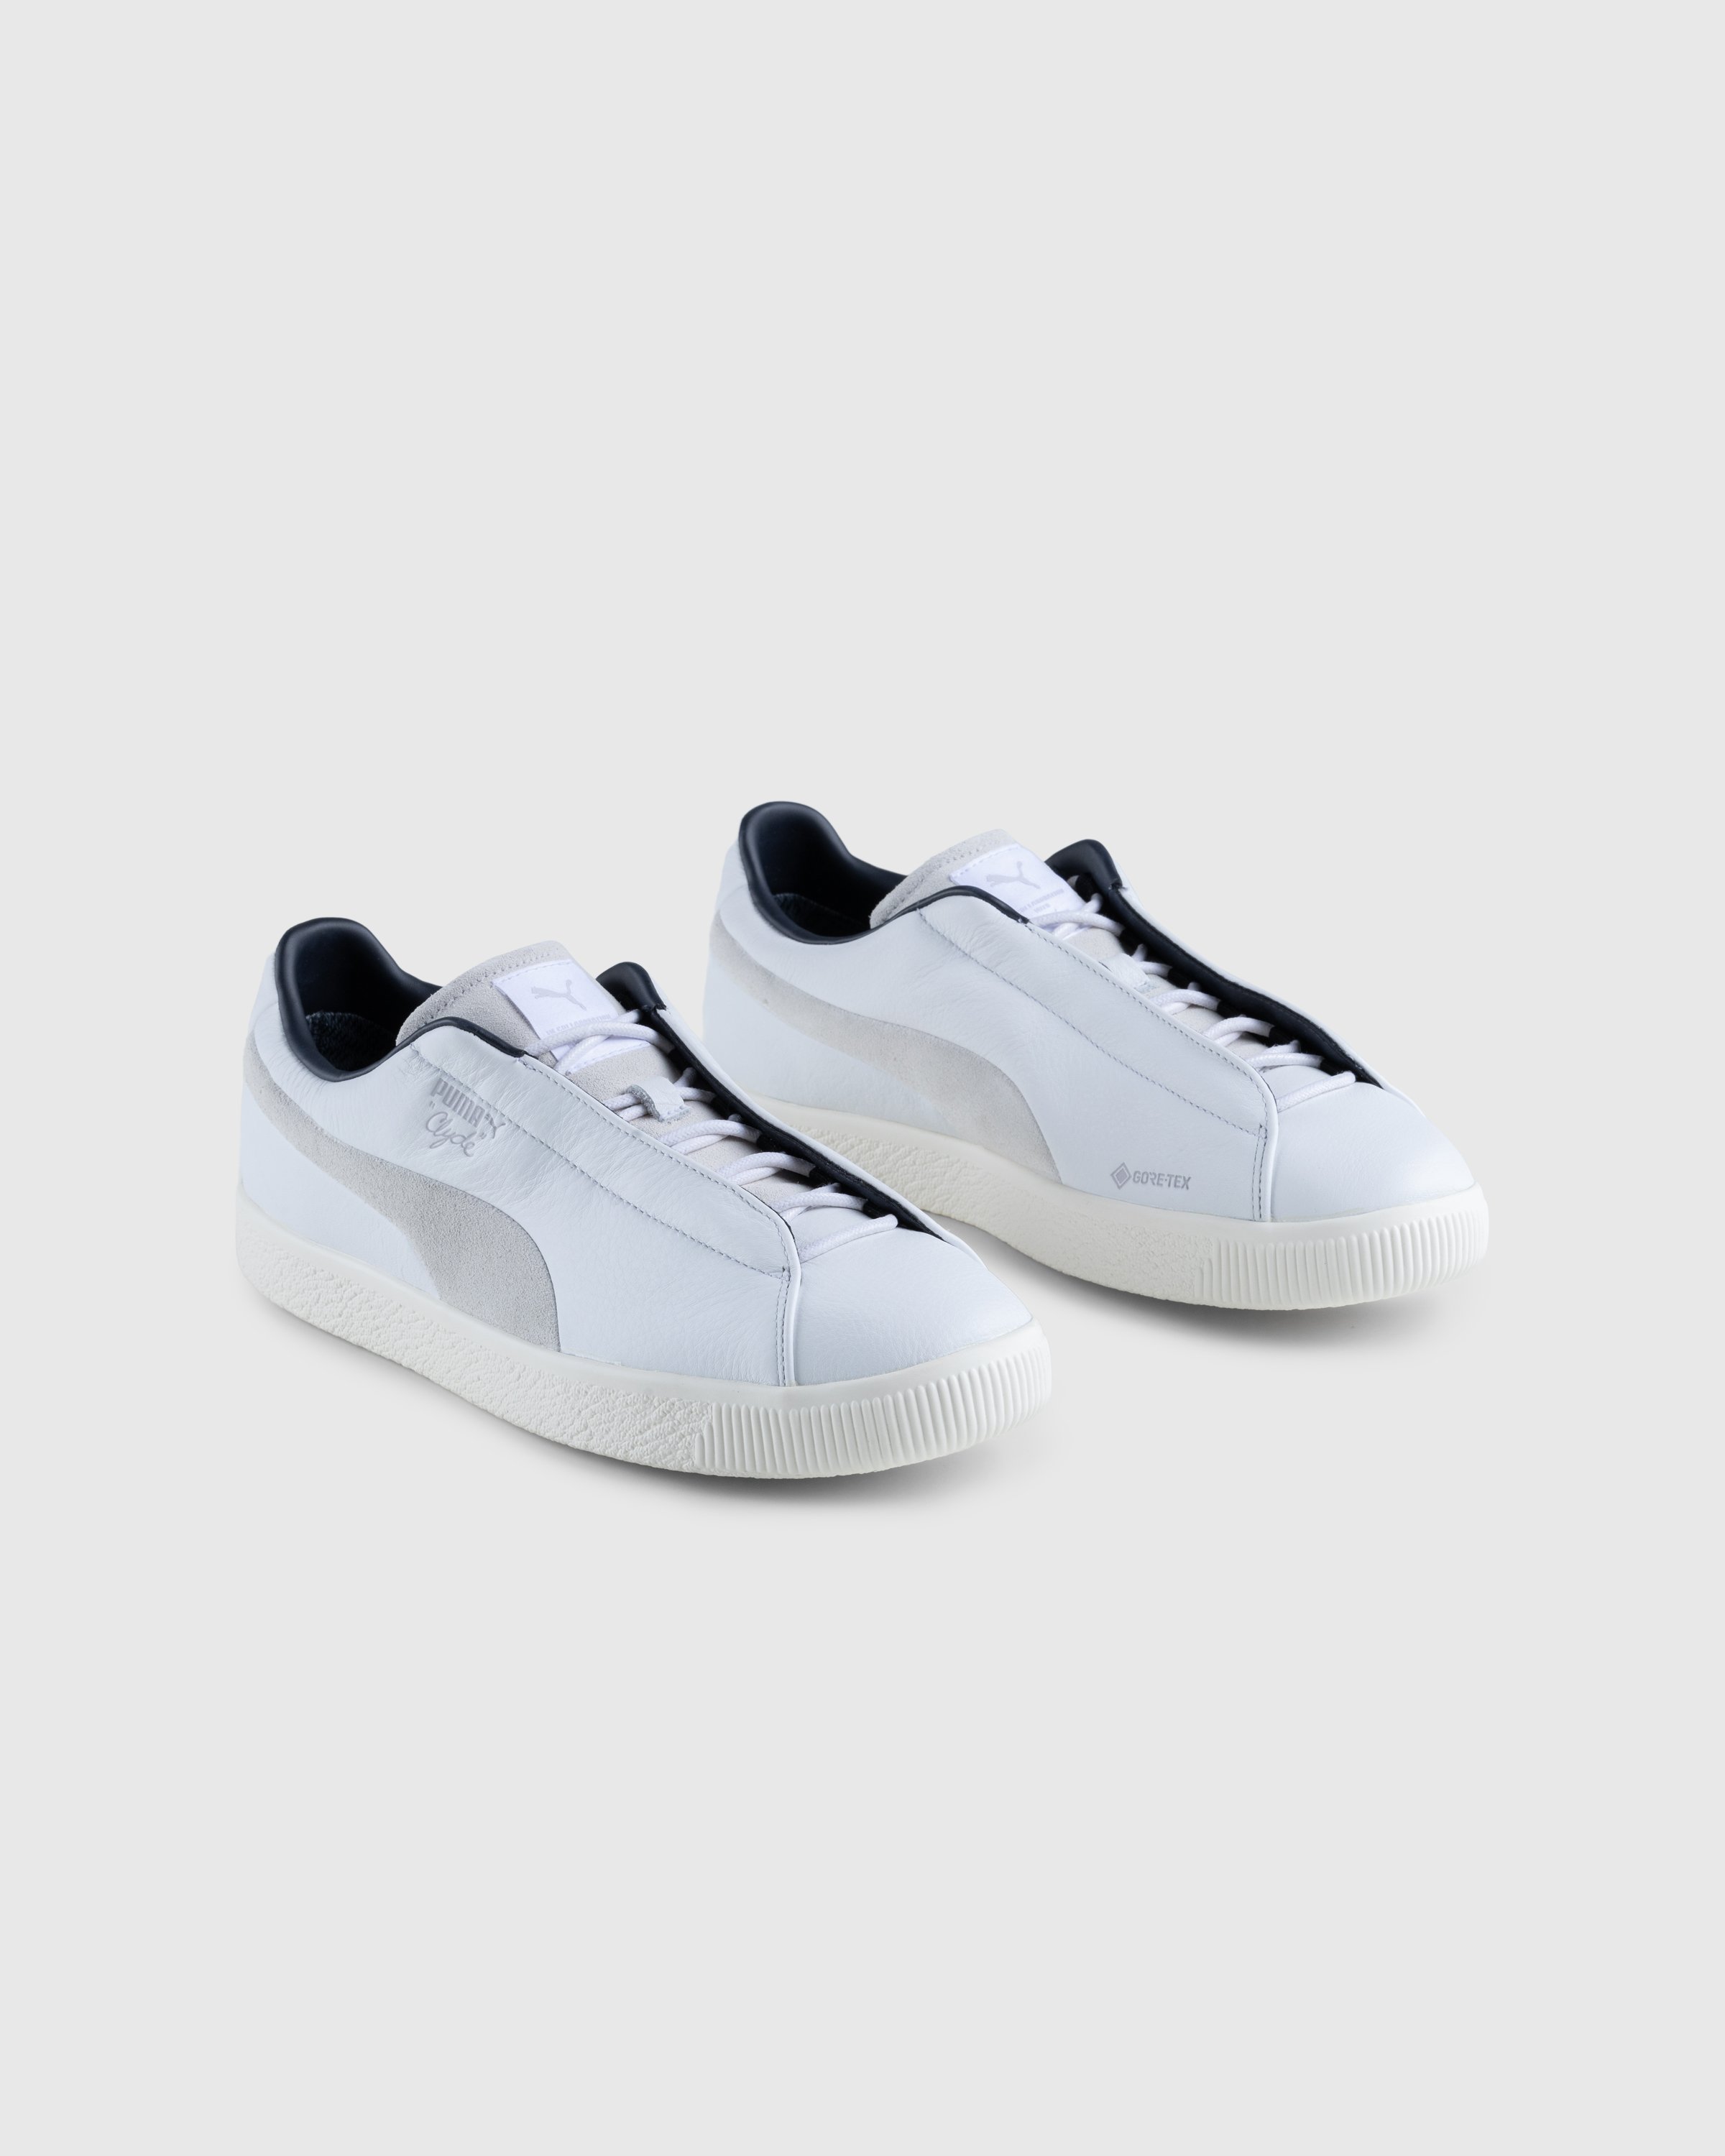 Puma x Nanamica - Clyde GORE-TEX White - Footwear - White - Image 3